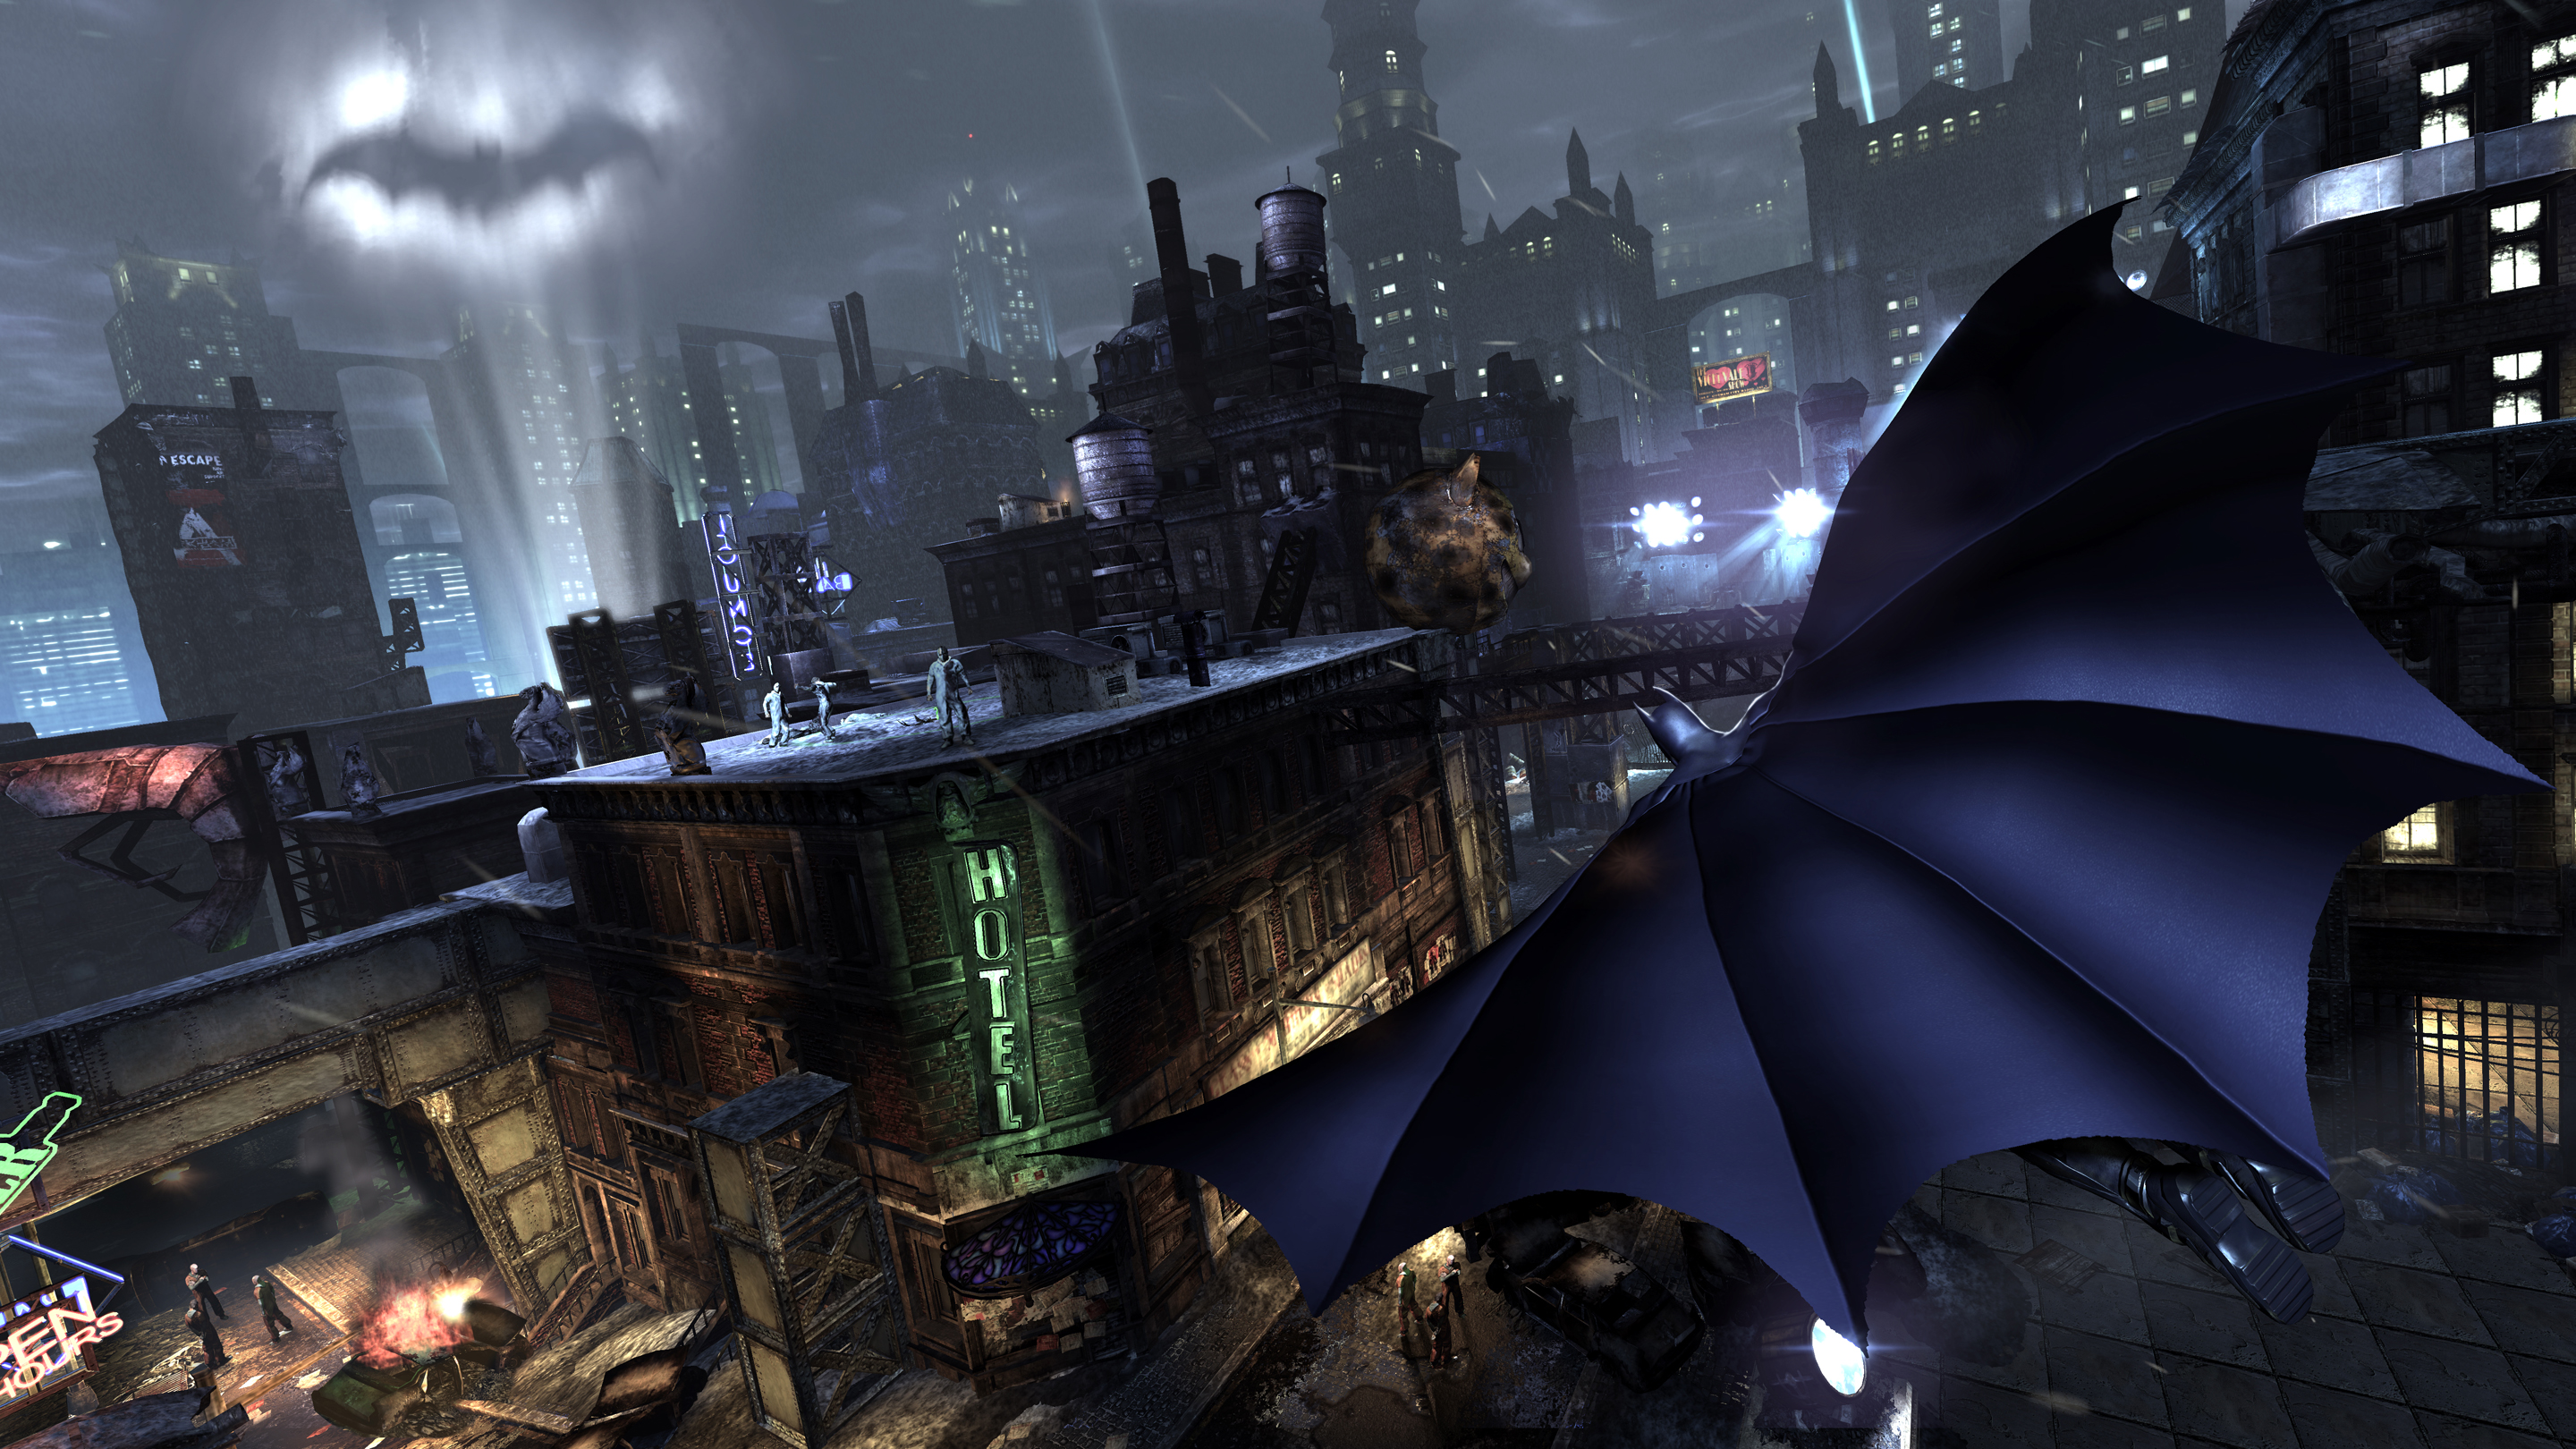 Media asset in full size related to 3dfxzone.it news item entitled as follows: Rocksteady pubblica nuovi screenshots di Batman: Arkham City | Image Name: news14011_2.jpg